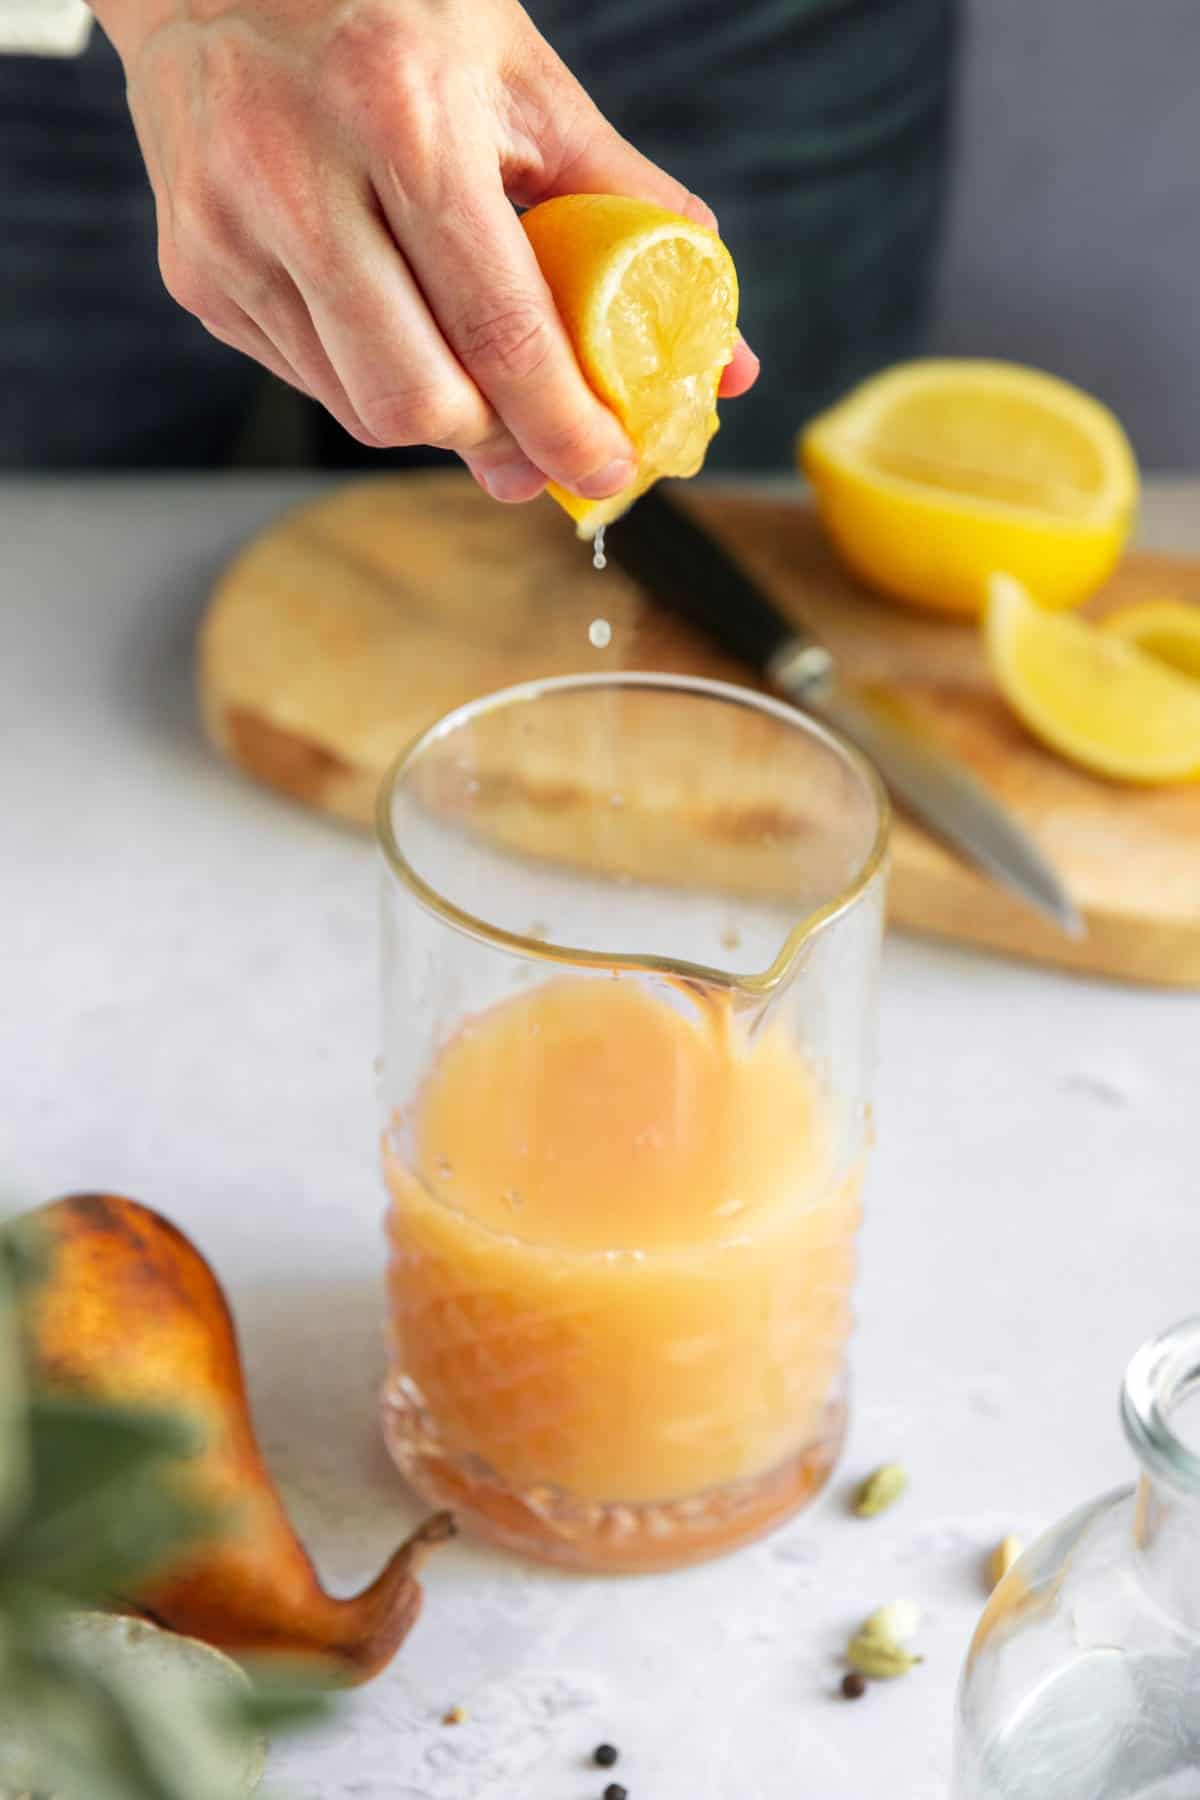 Pear juice for homemade ginseng elixir